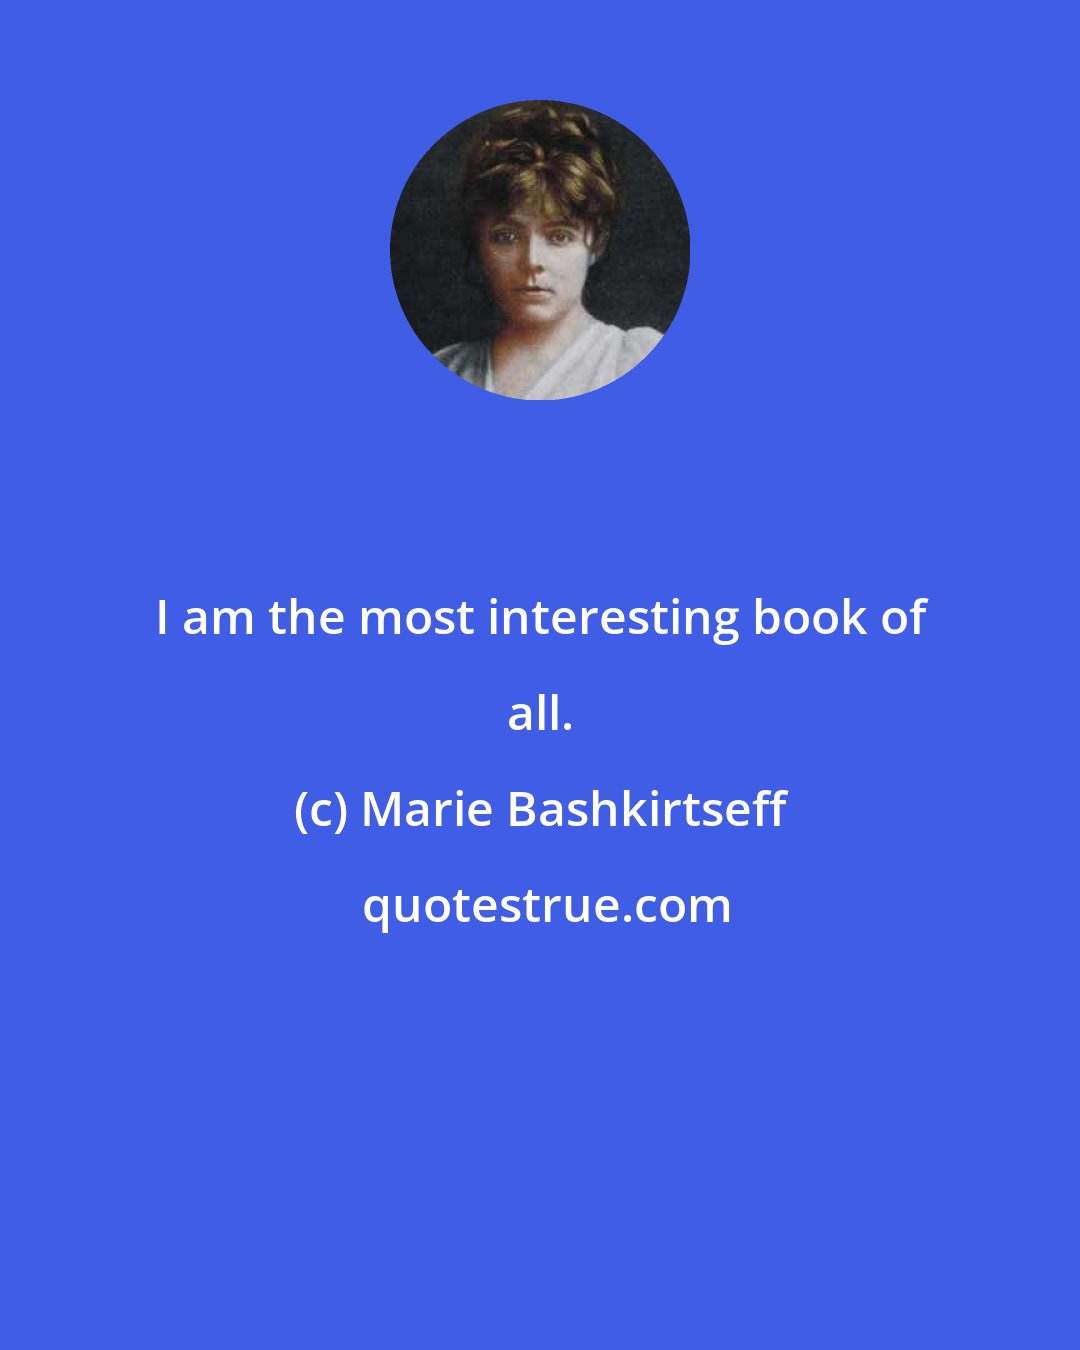 Marie Bashkirtseff: I am the most interesting book of all.